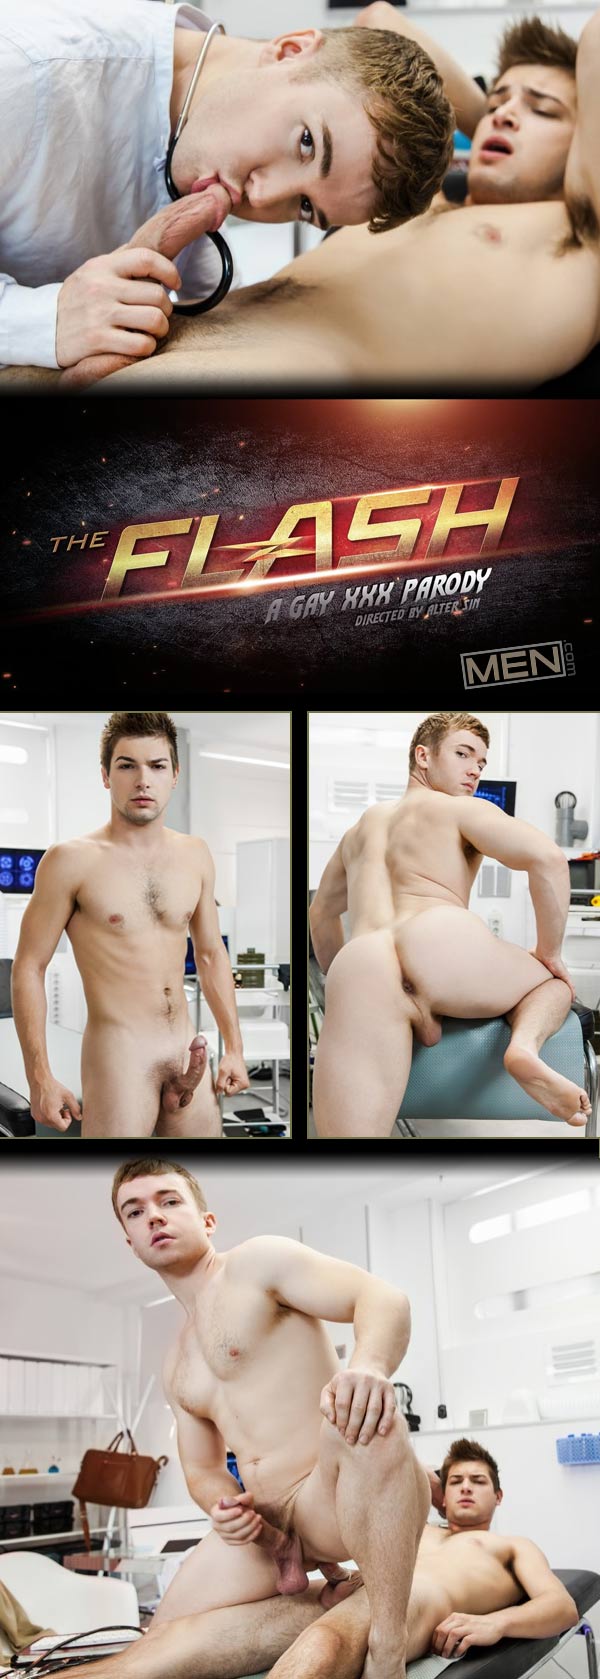 Johnny Rapid Fucks Gabriel Cross in 'The Flash: A Gay XXX Parody' Part 1 at  Men.com - WAYBIG